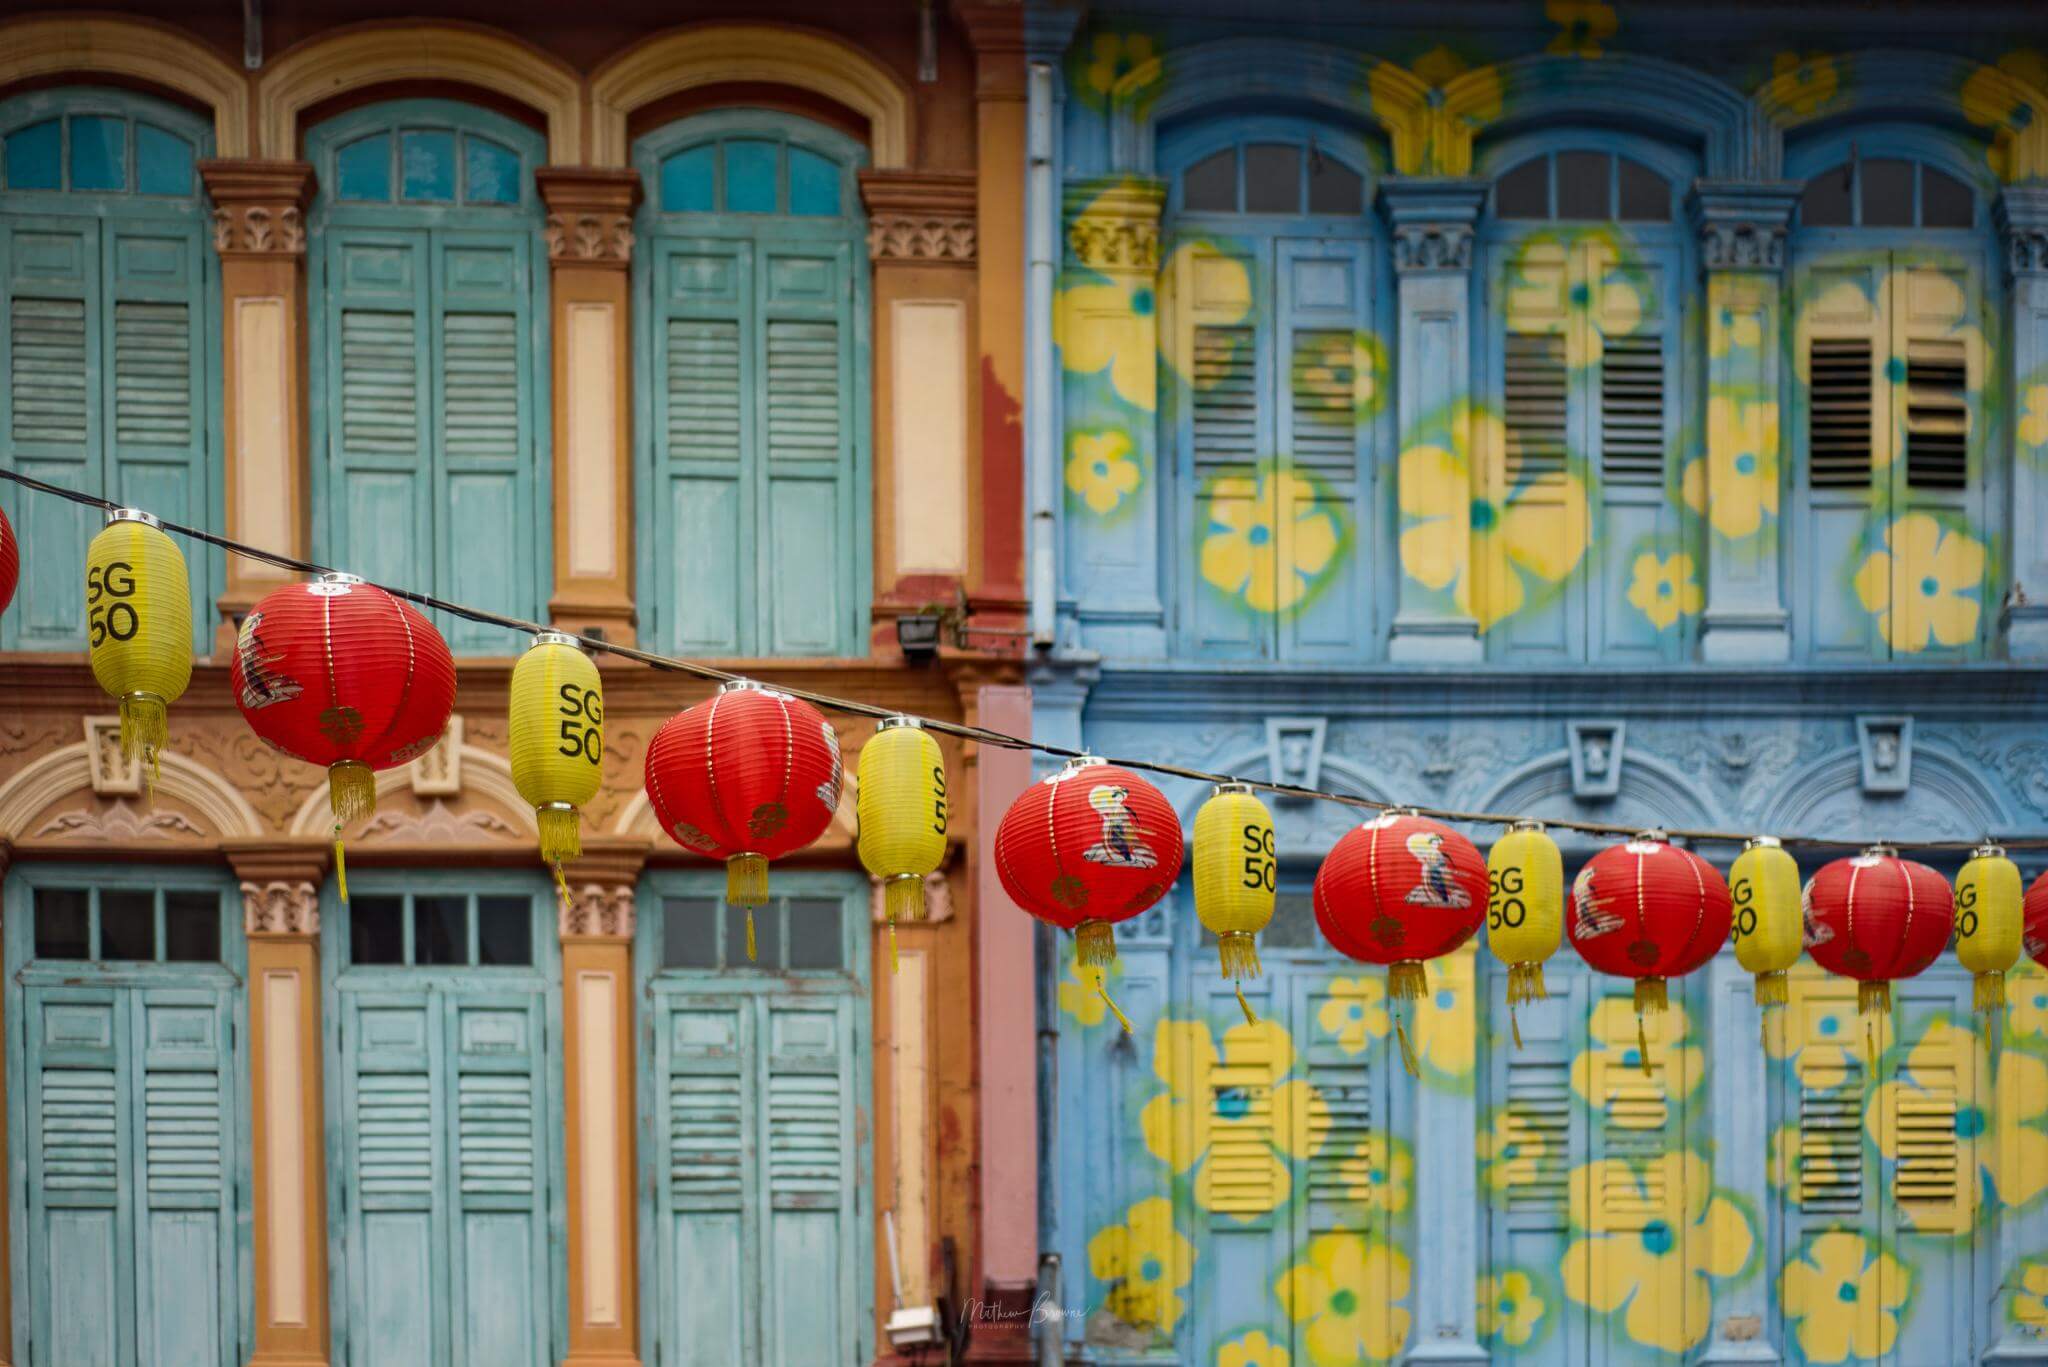 Singapore photography spots - Chinatown